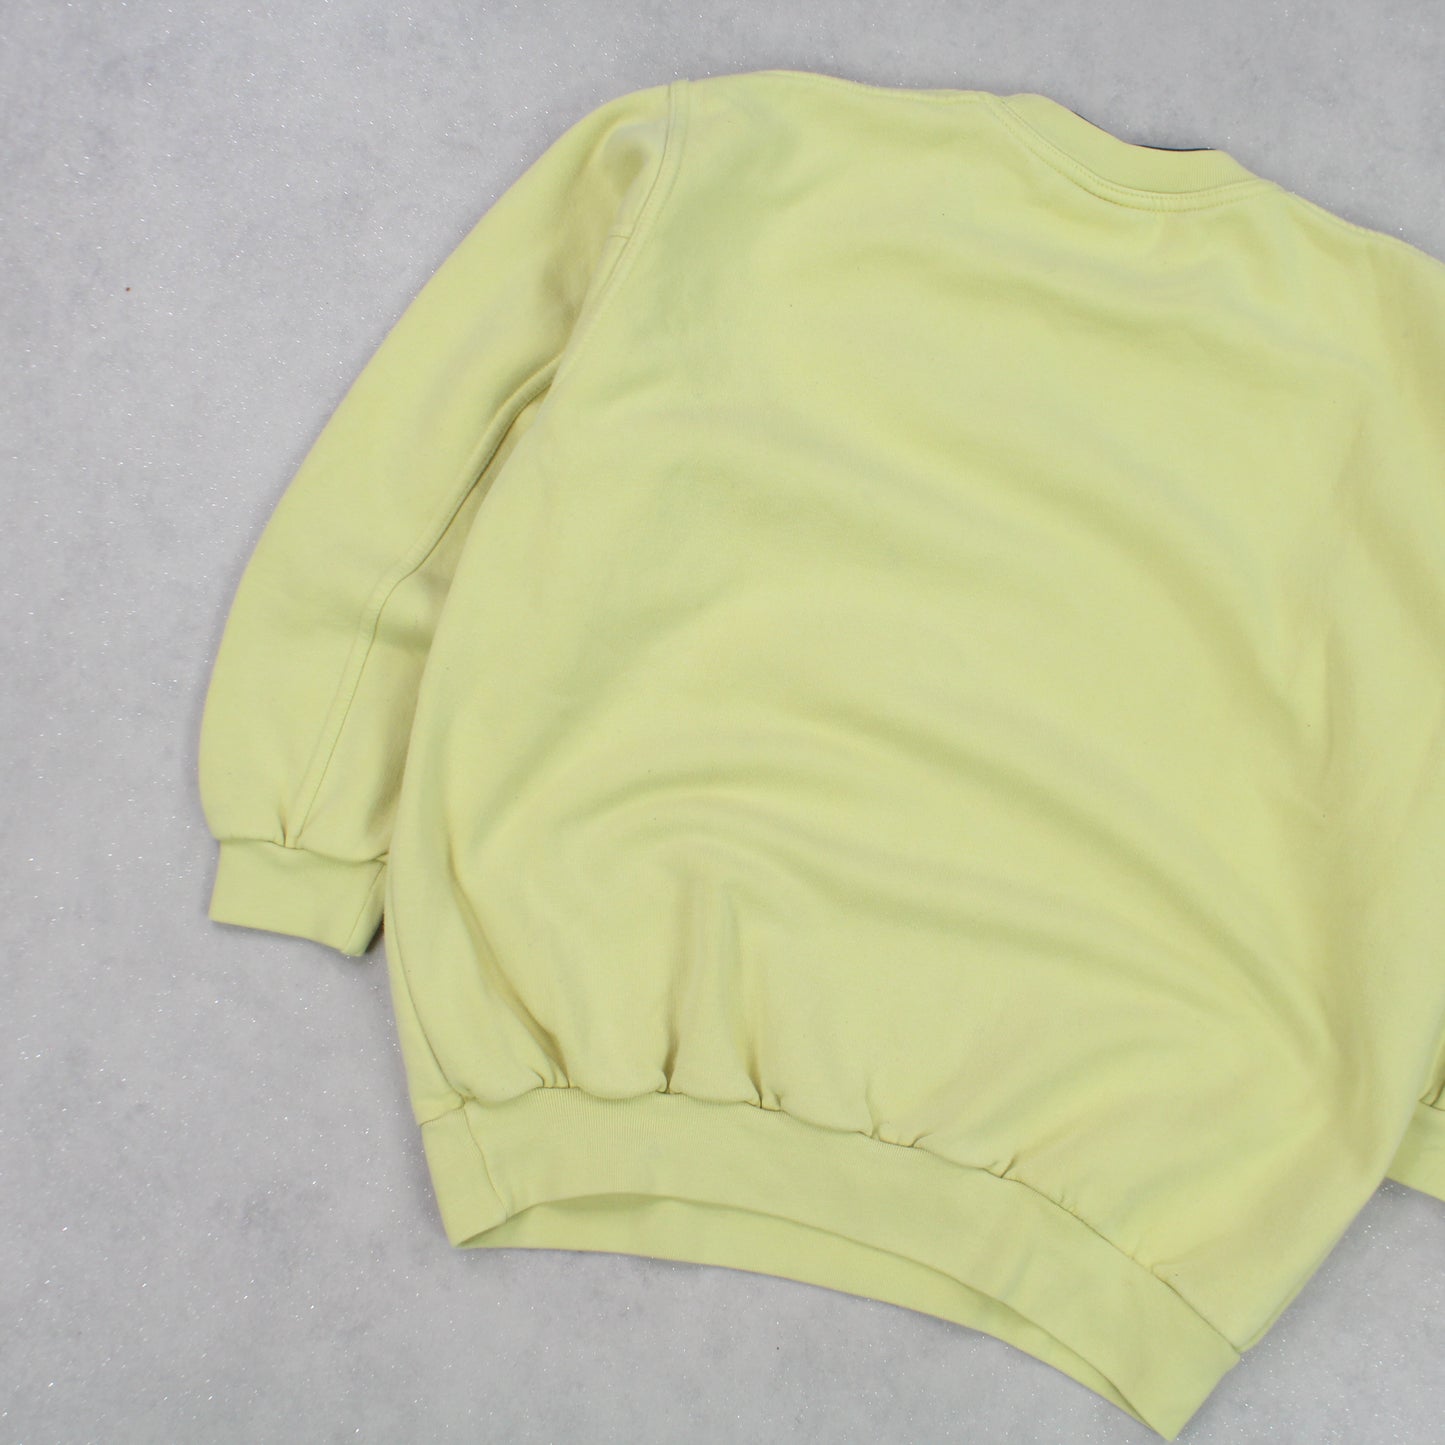 SUPER RARE Vintage 1990s Nike Sweatshirt Yellow - (S)